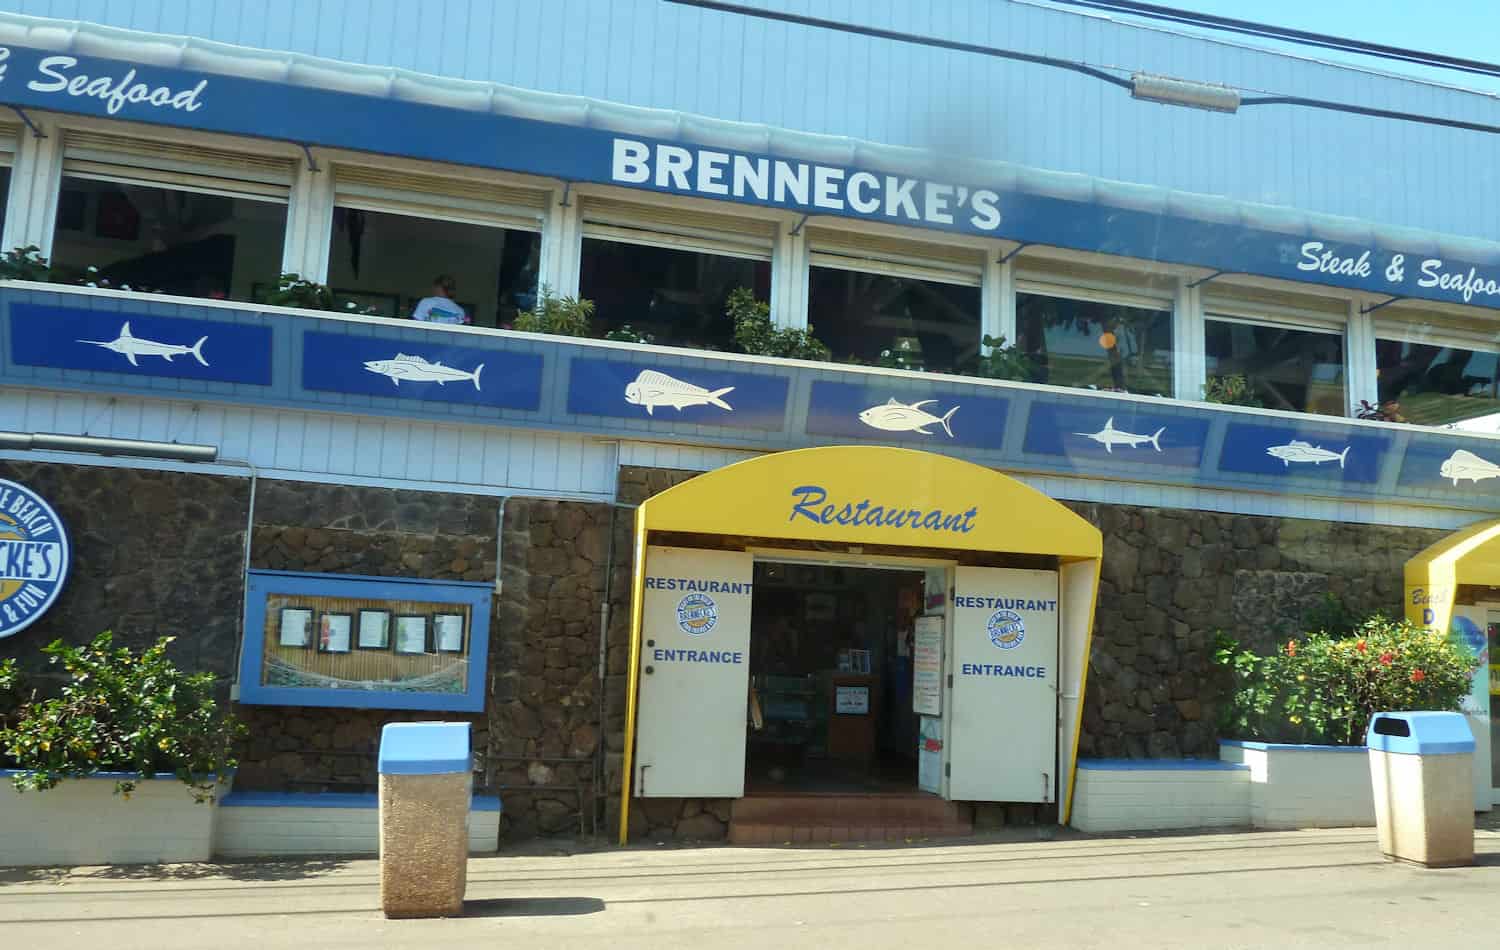 Brennecke’s Beach Broiler